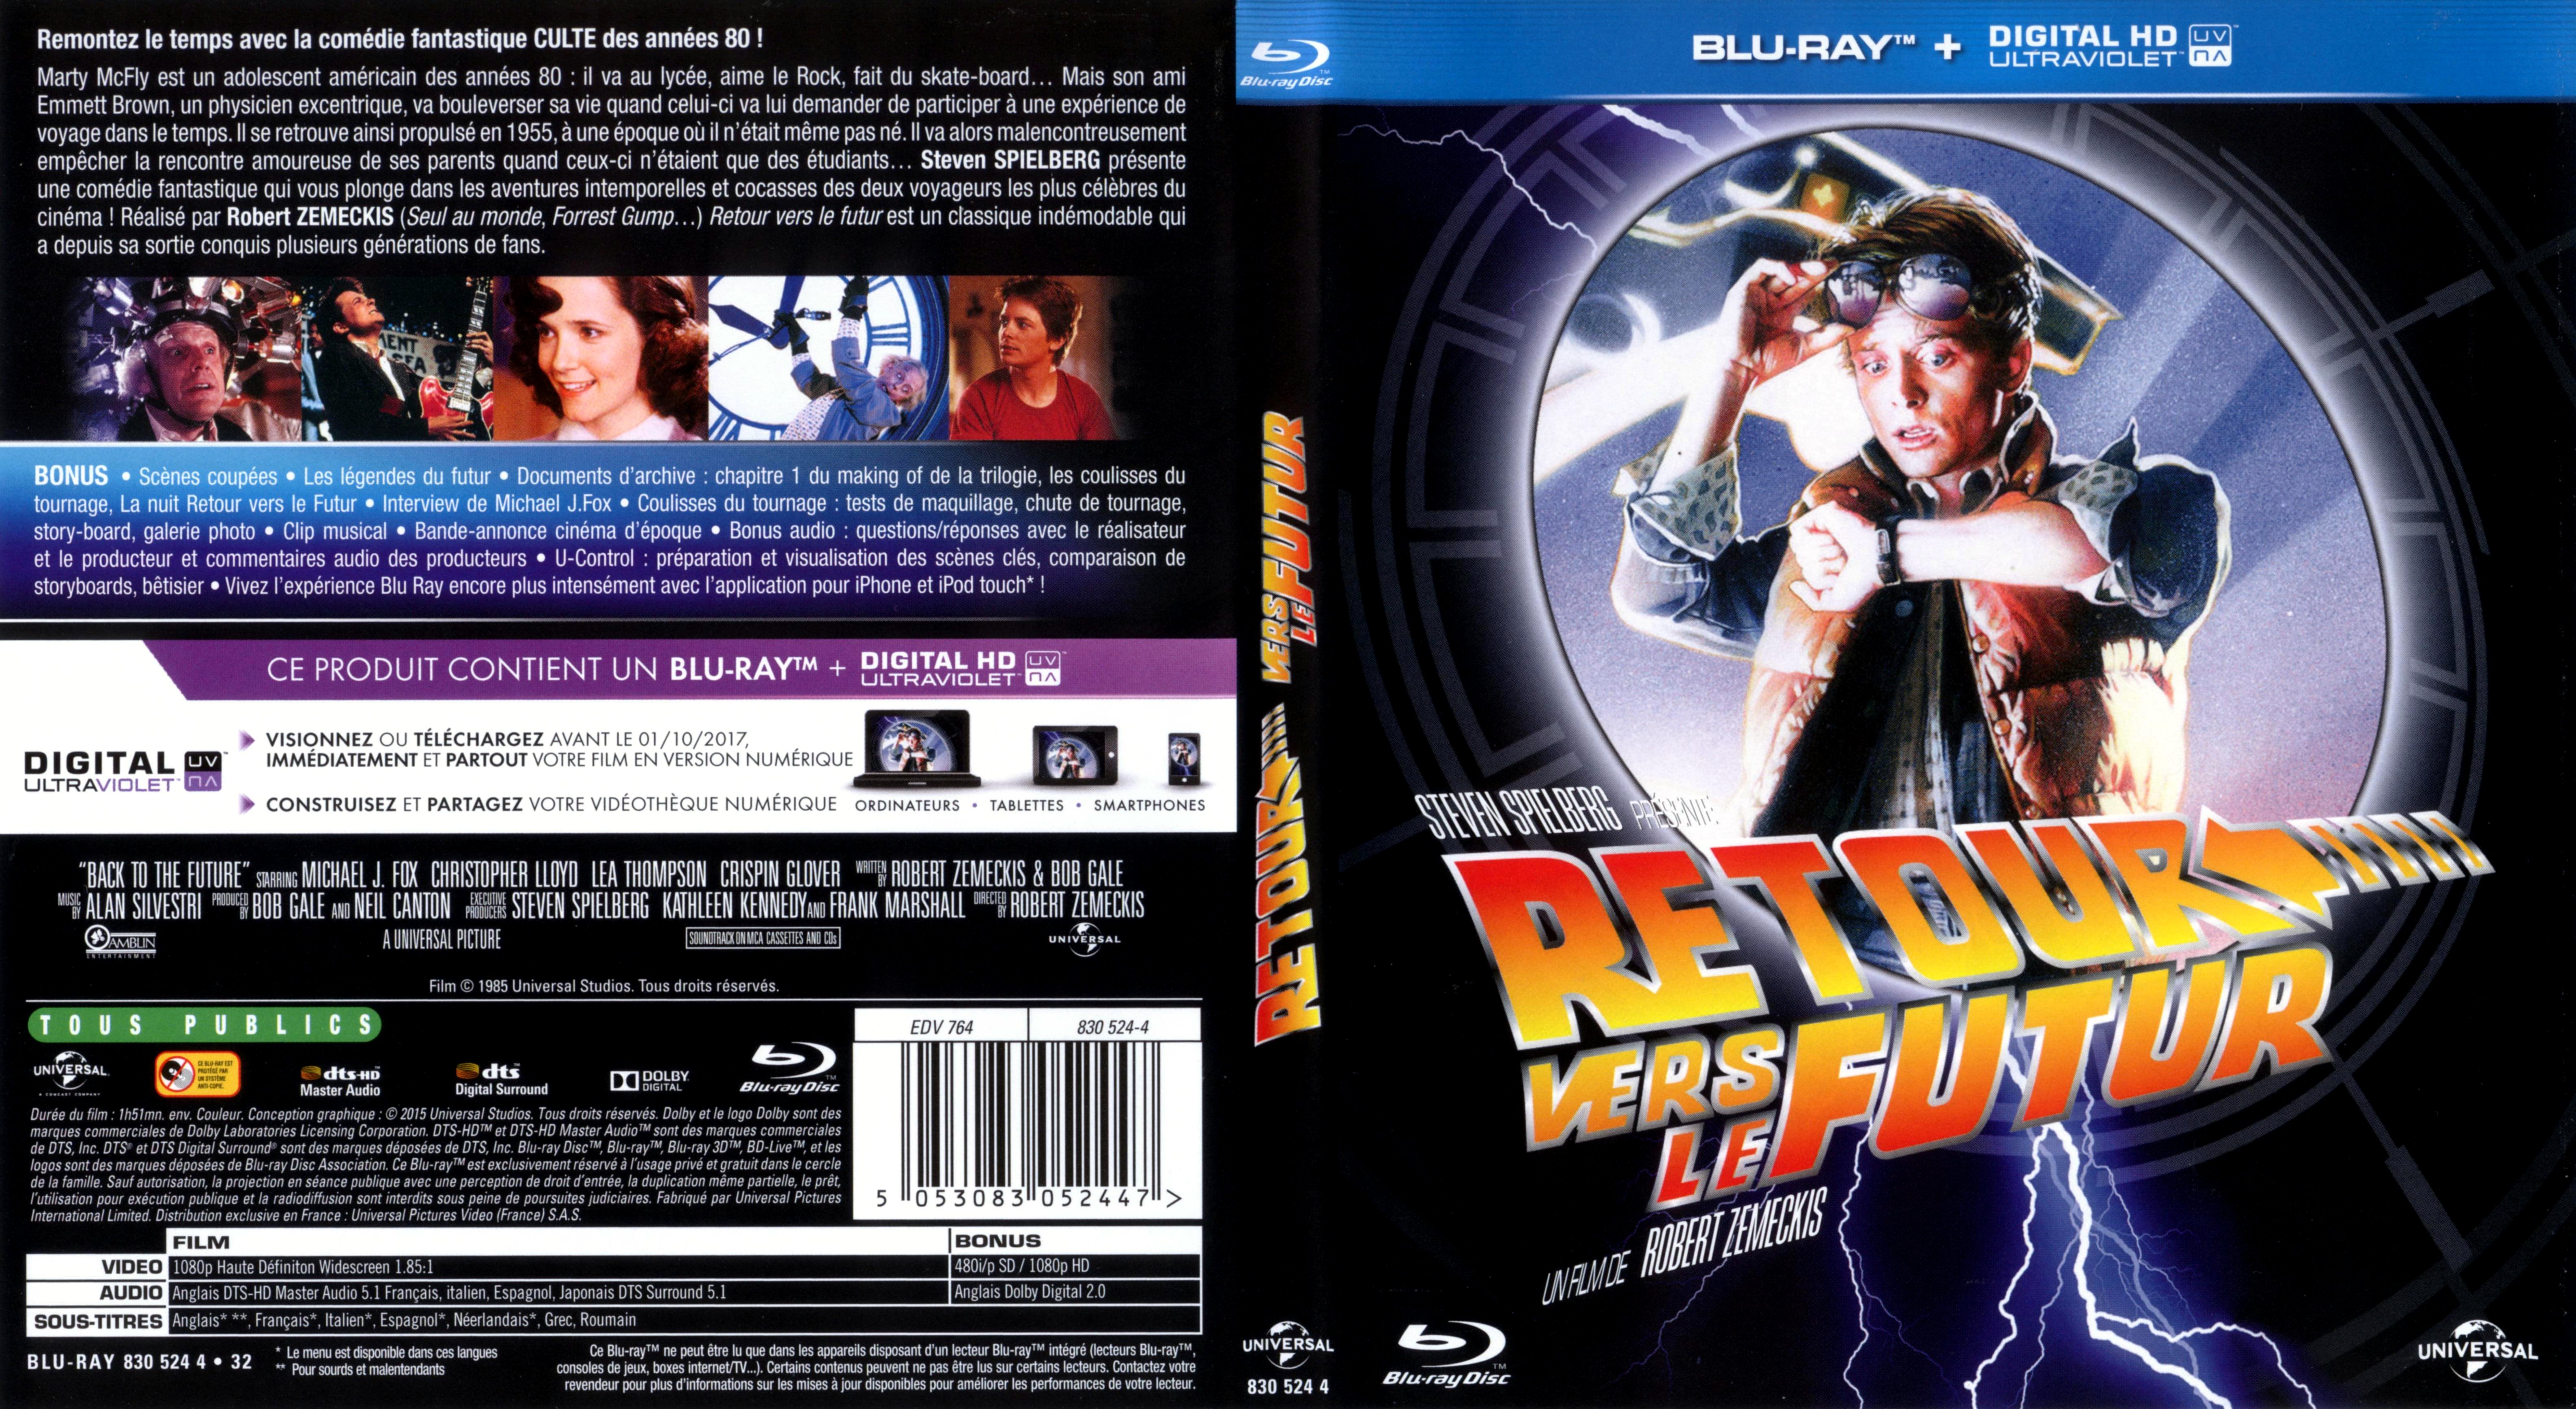 Jaquette DVD Retour vers le futur (BLU-RAY) v2